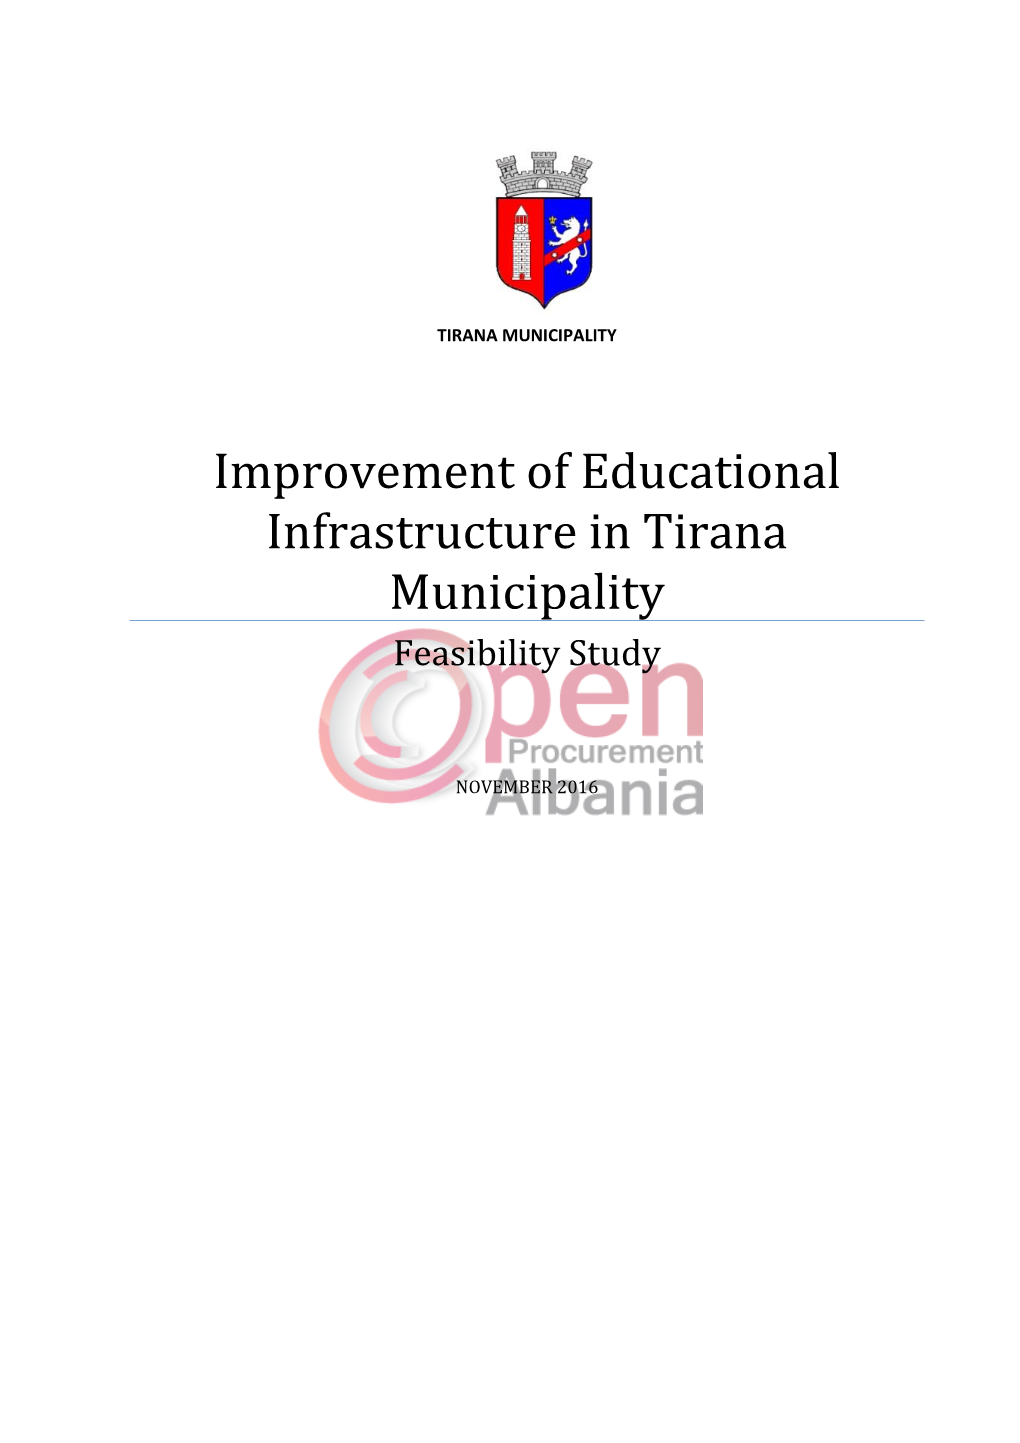 Improvement of Educational Infrastructure in Tirana Municipality Feasibility Study